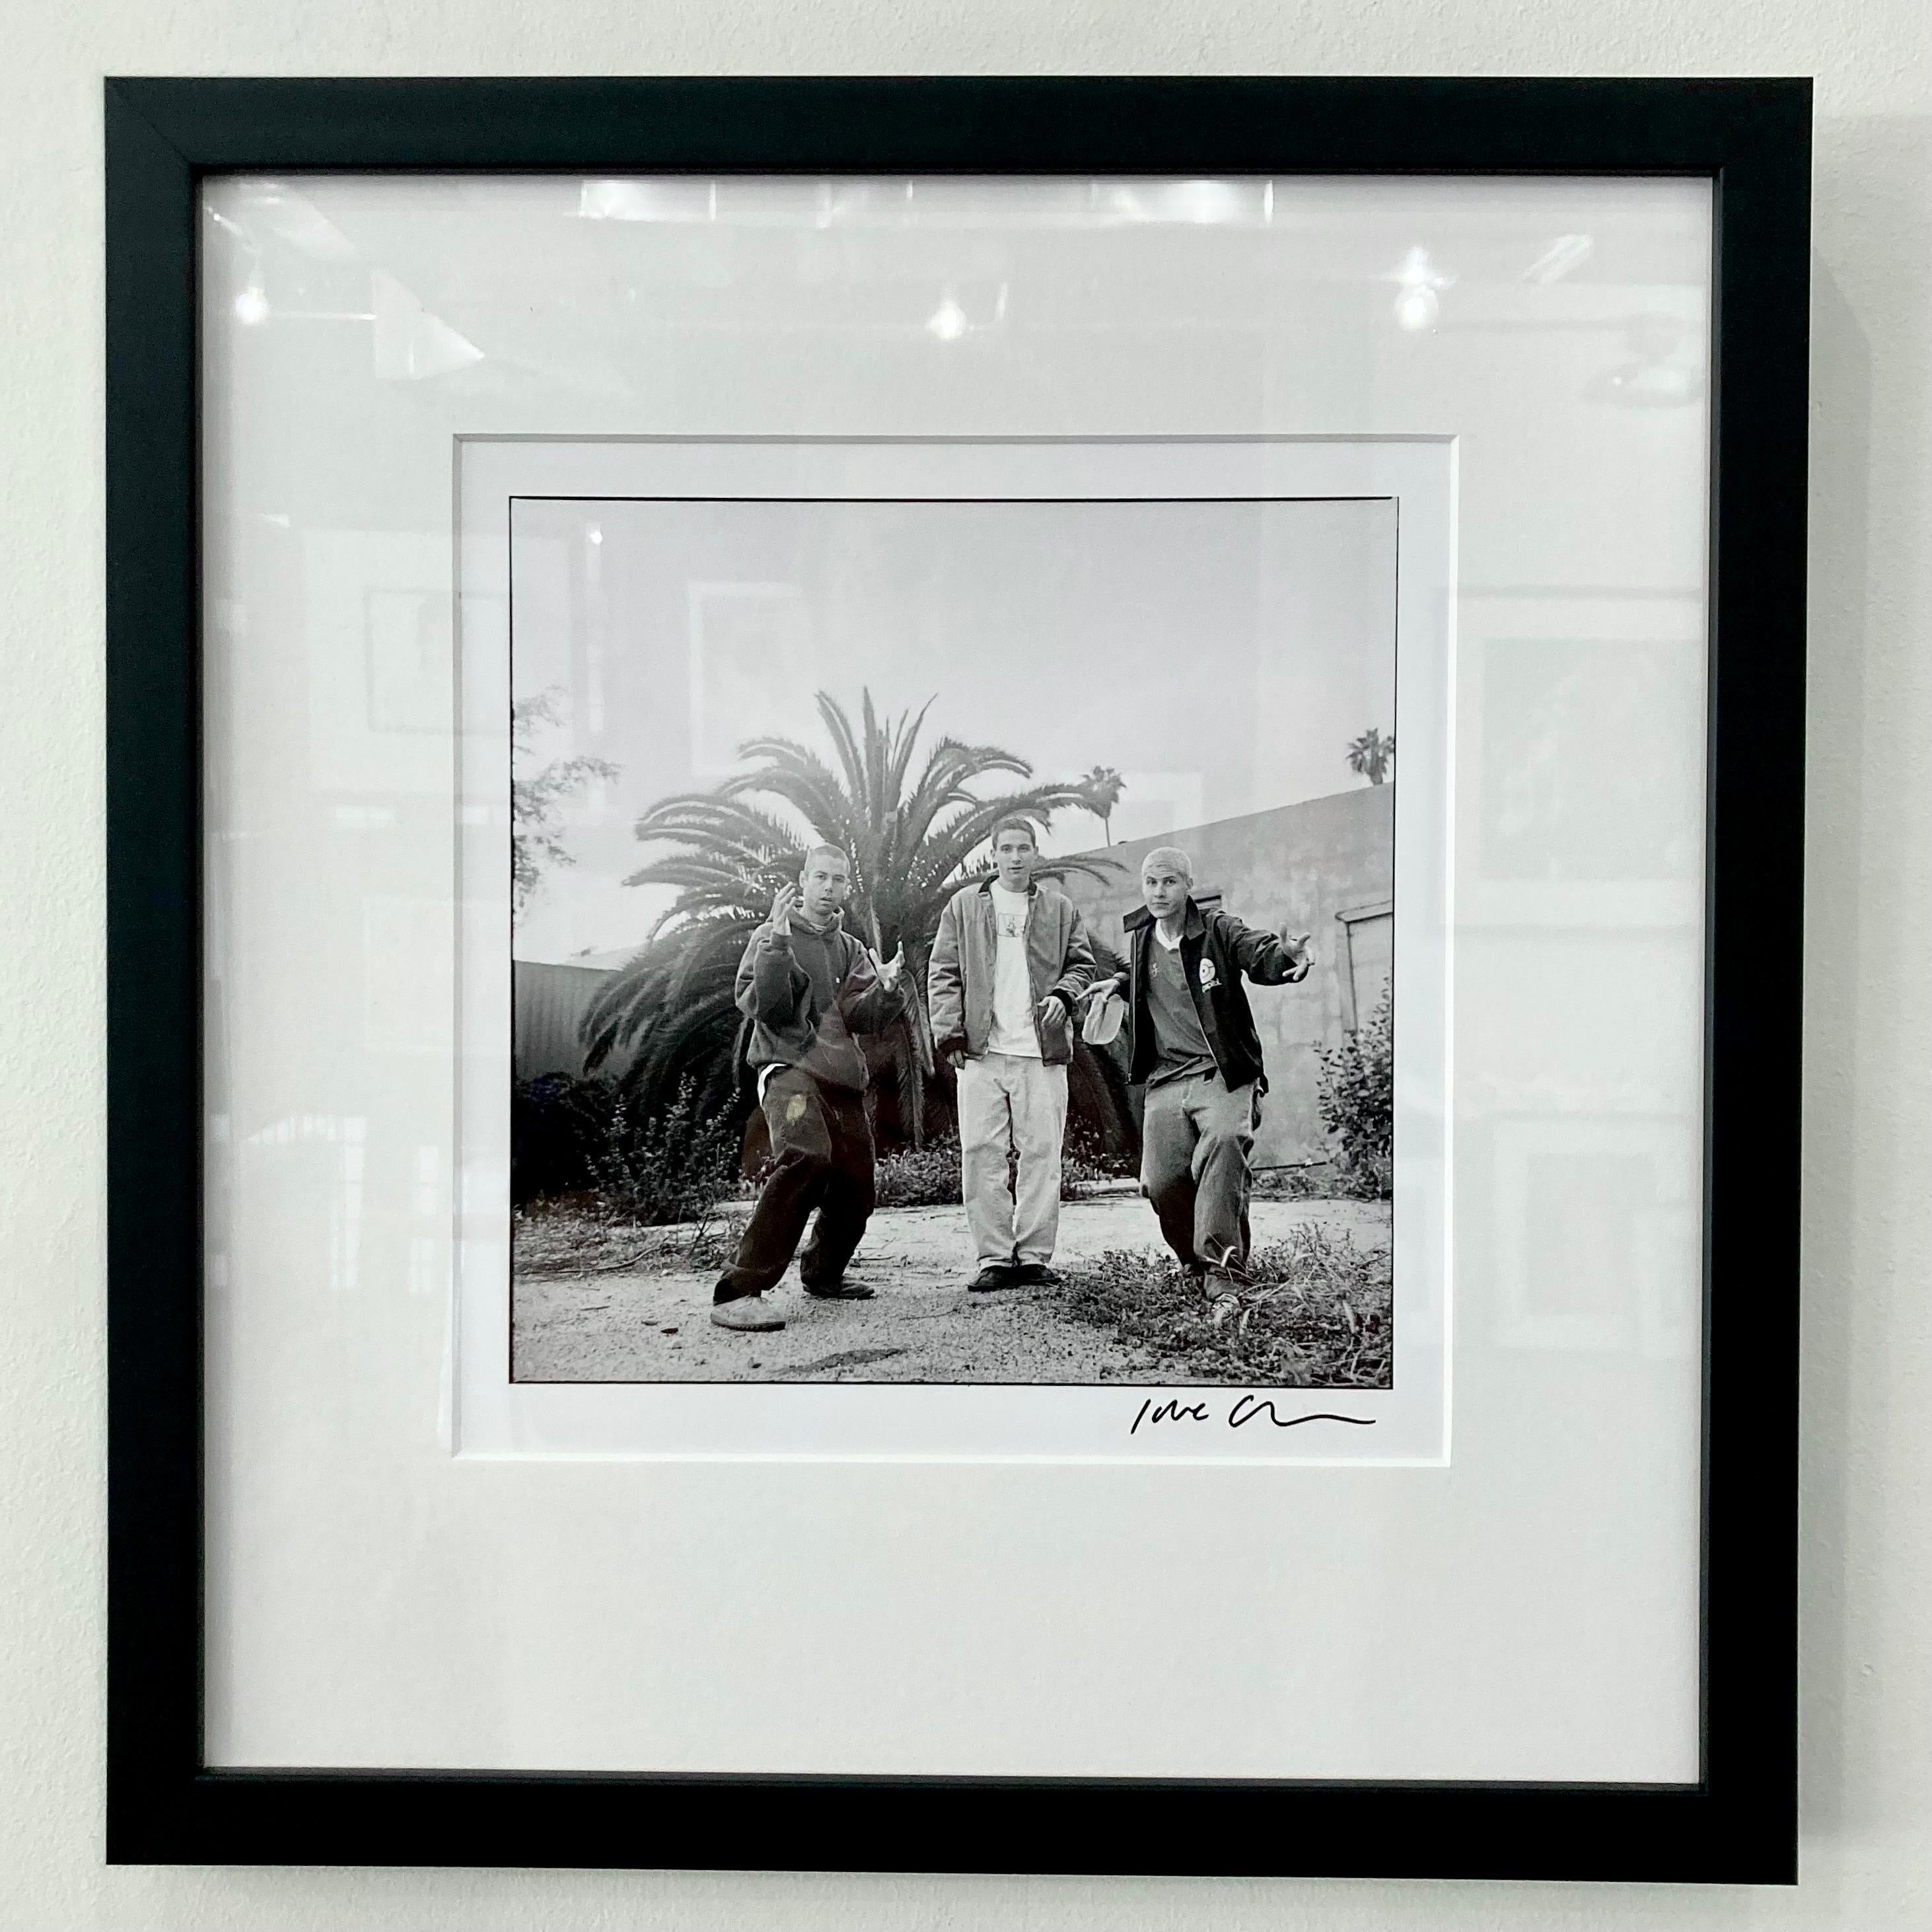 Beastie Boys by Jake Chessum framed signed 9x12